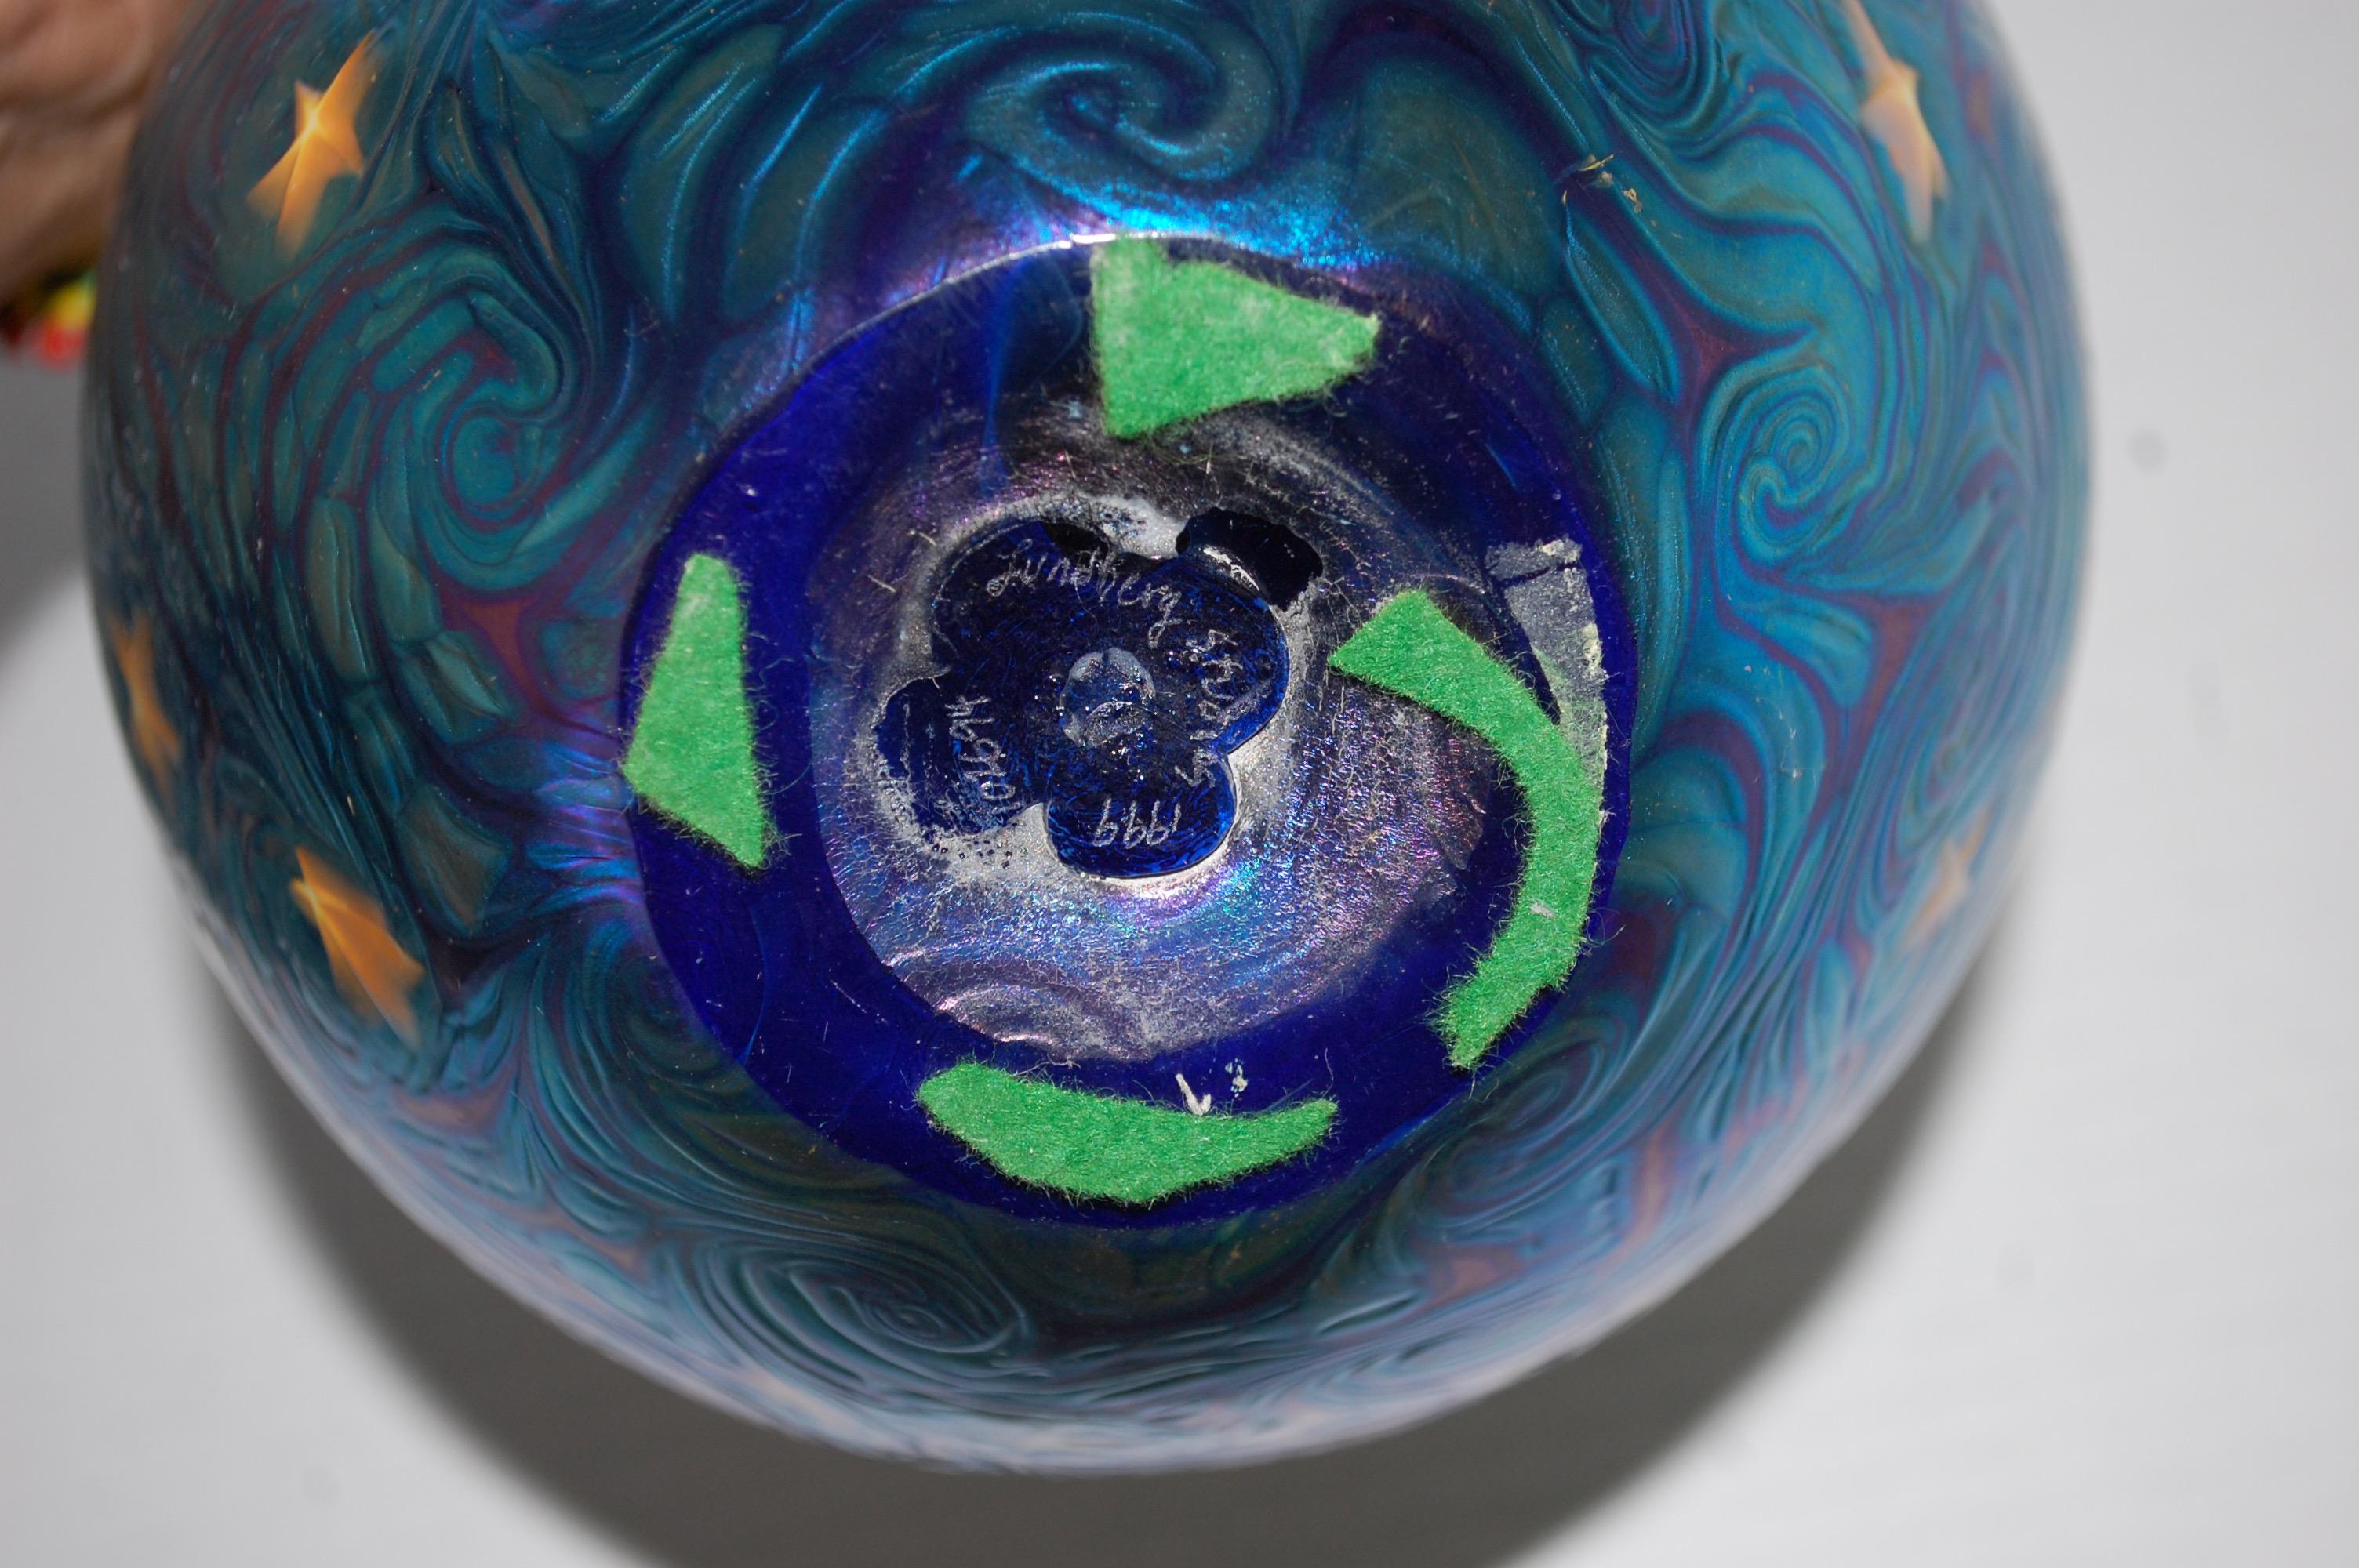  Art Glass Van Gogh Night Stars Vase - Contemporary Sculpture by Studios Lundberg